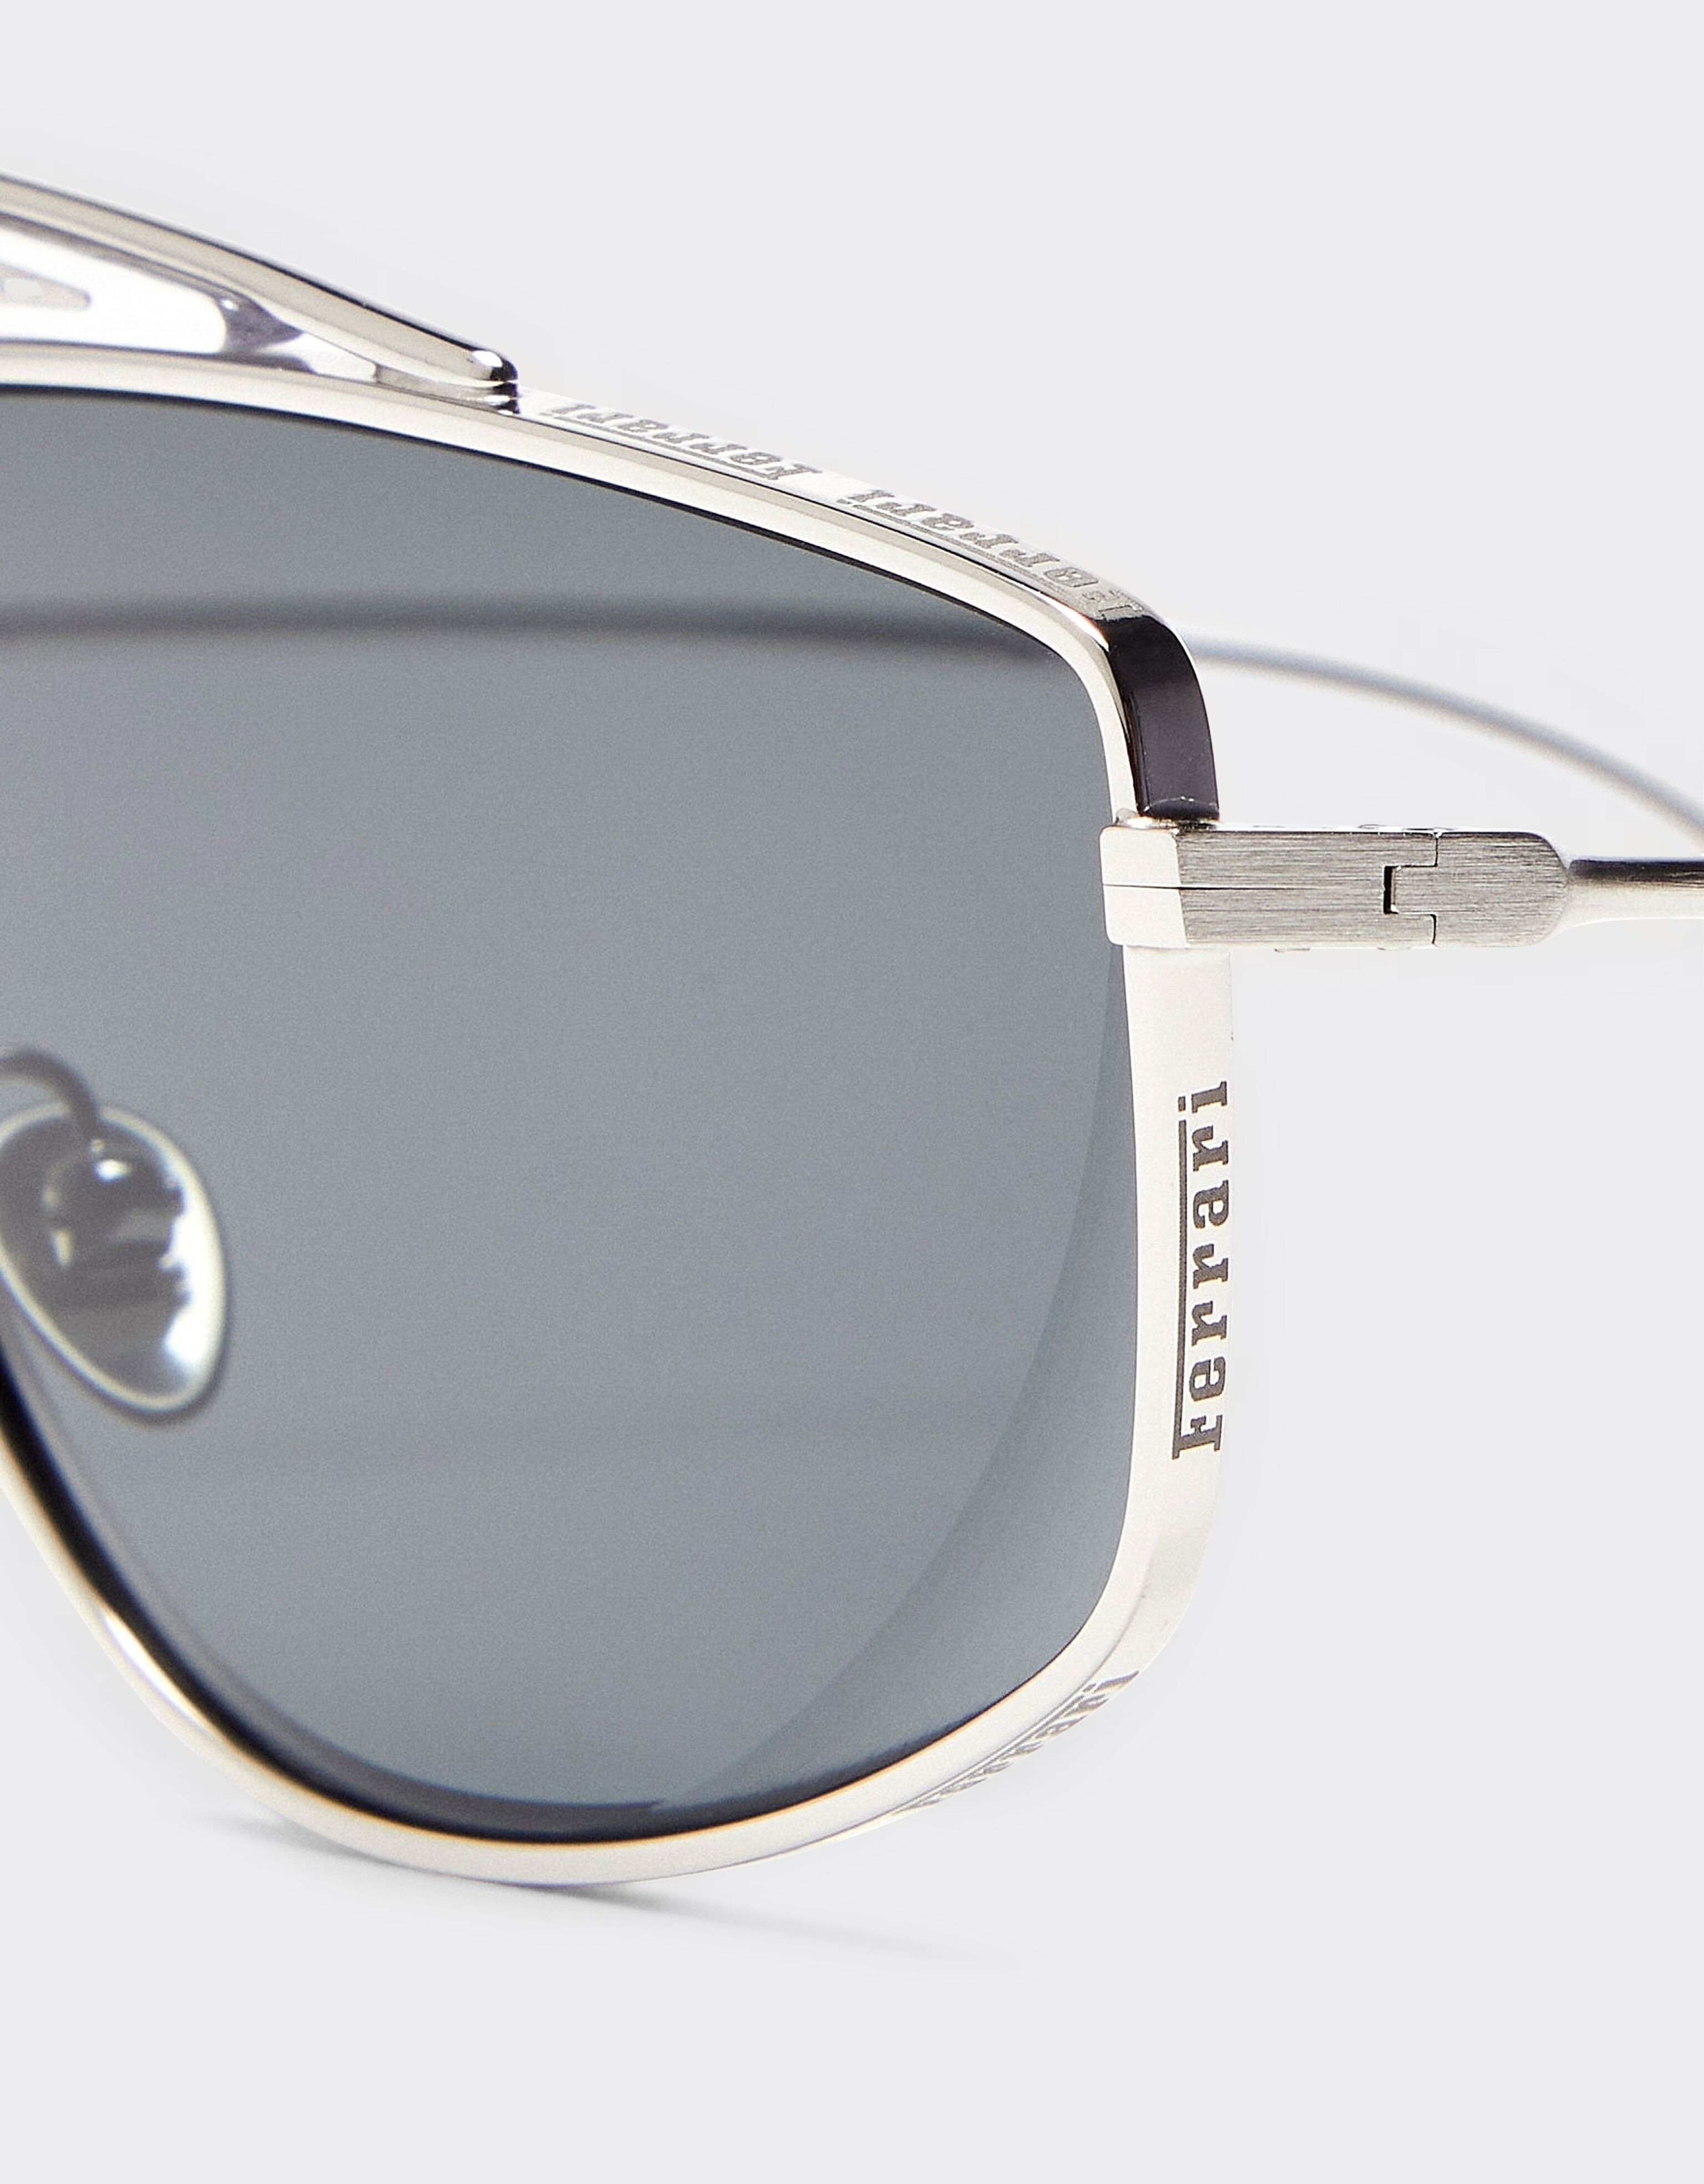 Ferrari Ferrari sunglasses with dark grey lenses Silver F0409f